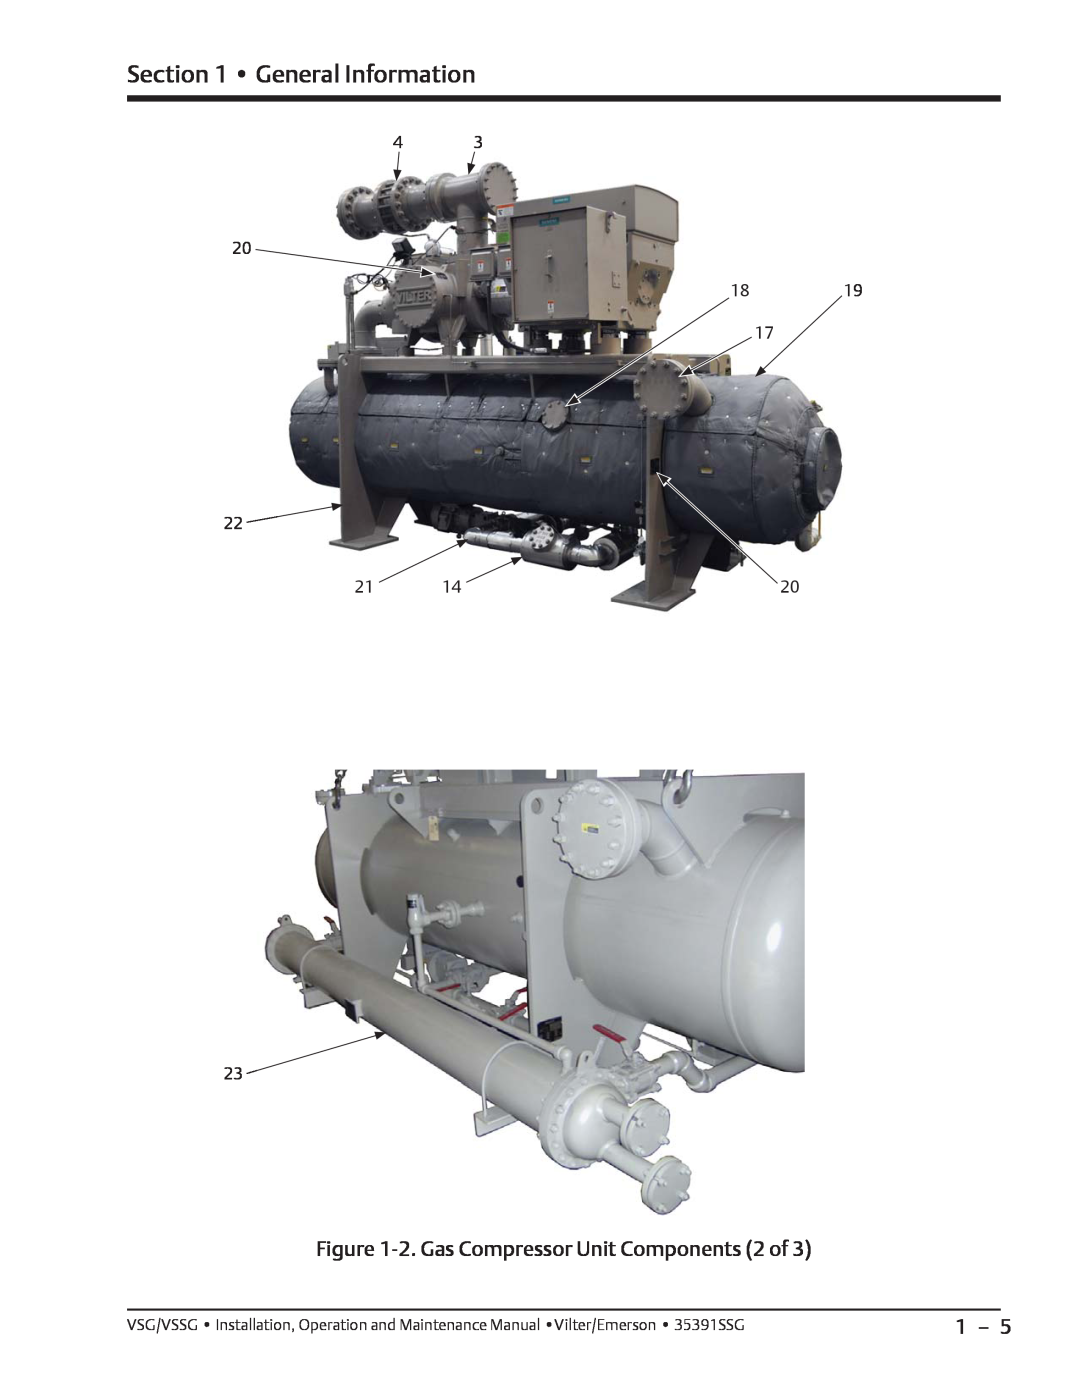 Emerson VSG, VSSG manual 2. Gas Compressor Unit Components 2 of, General Information 